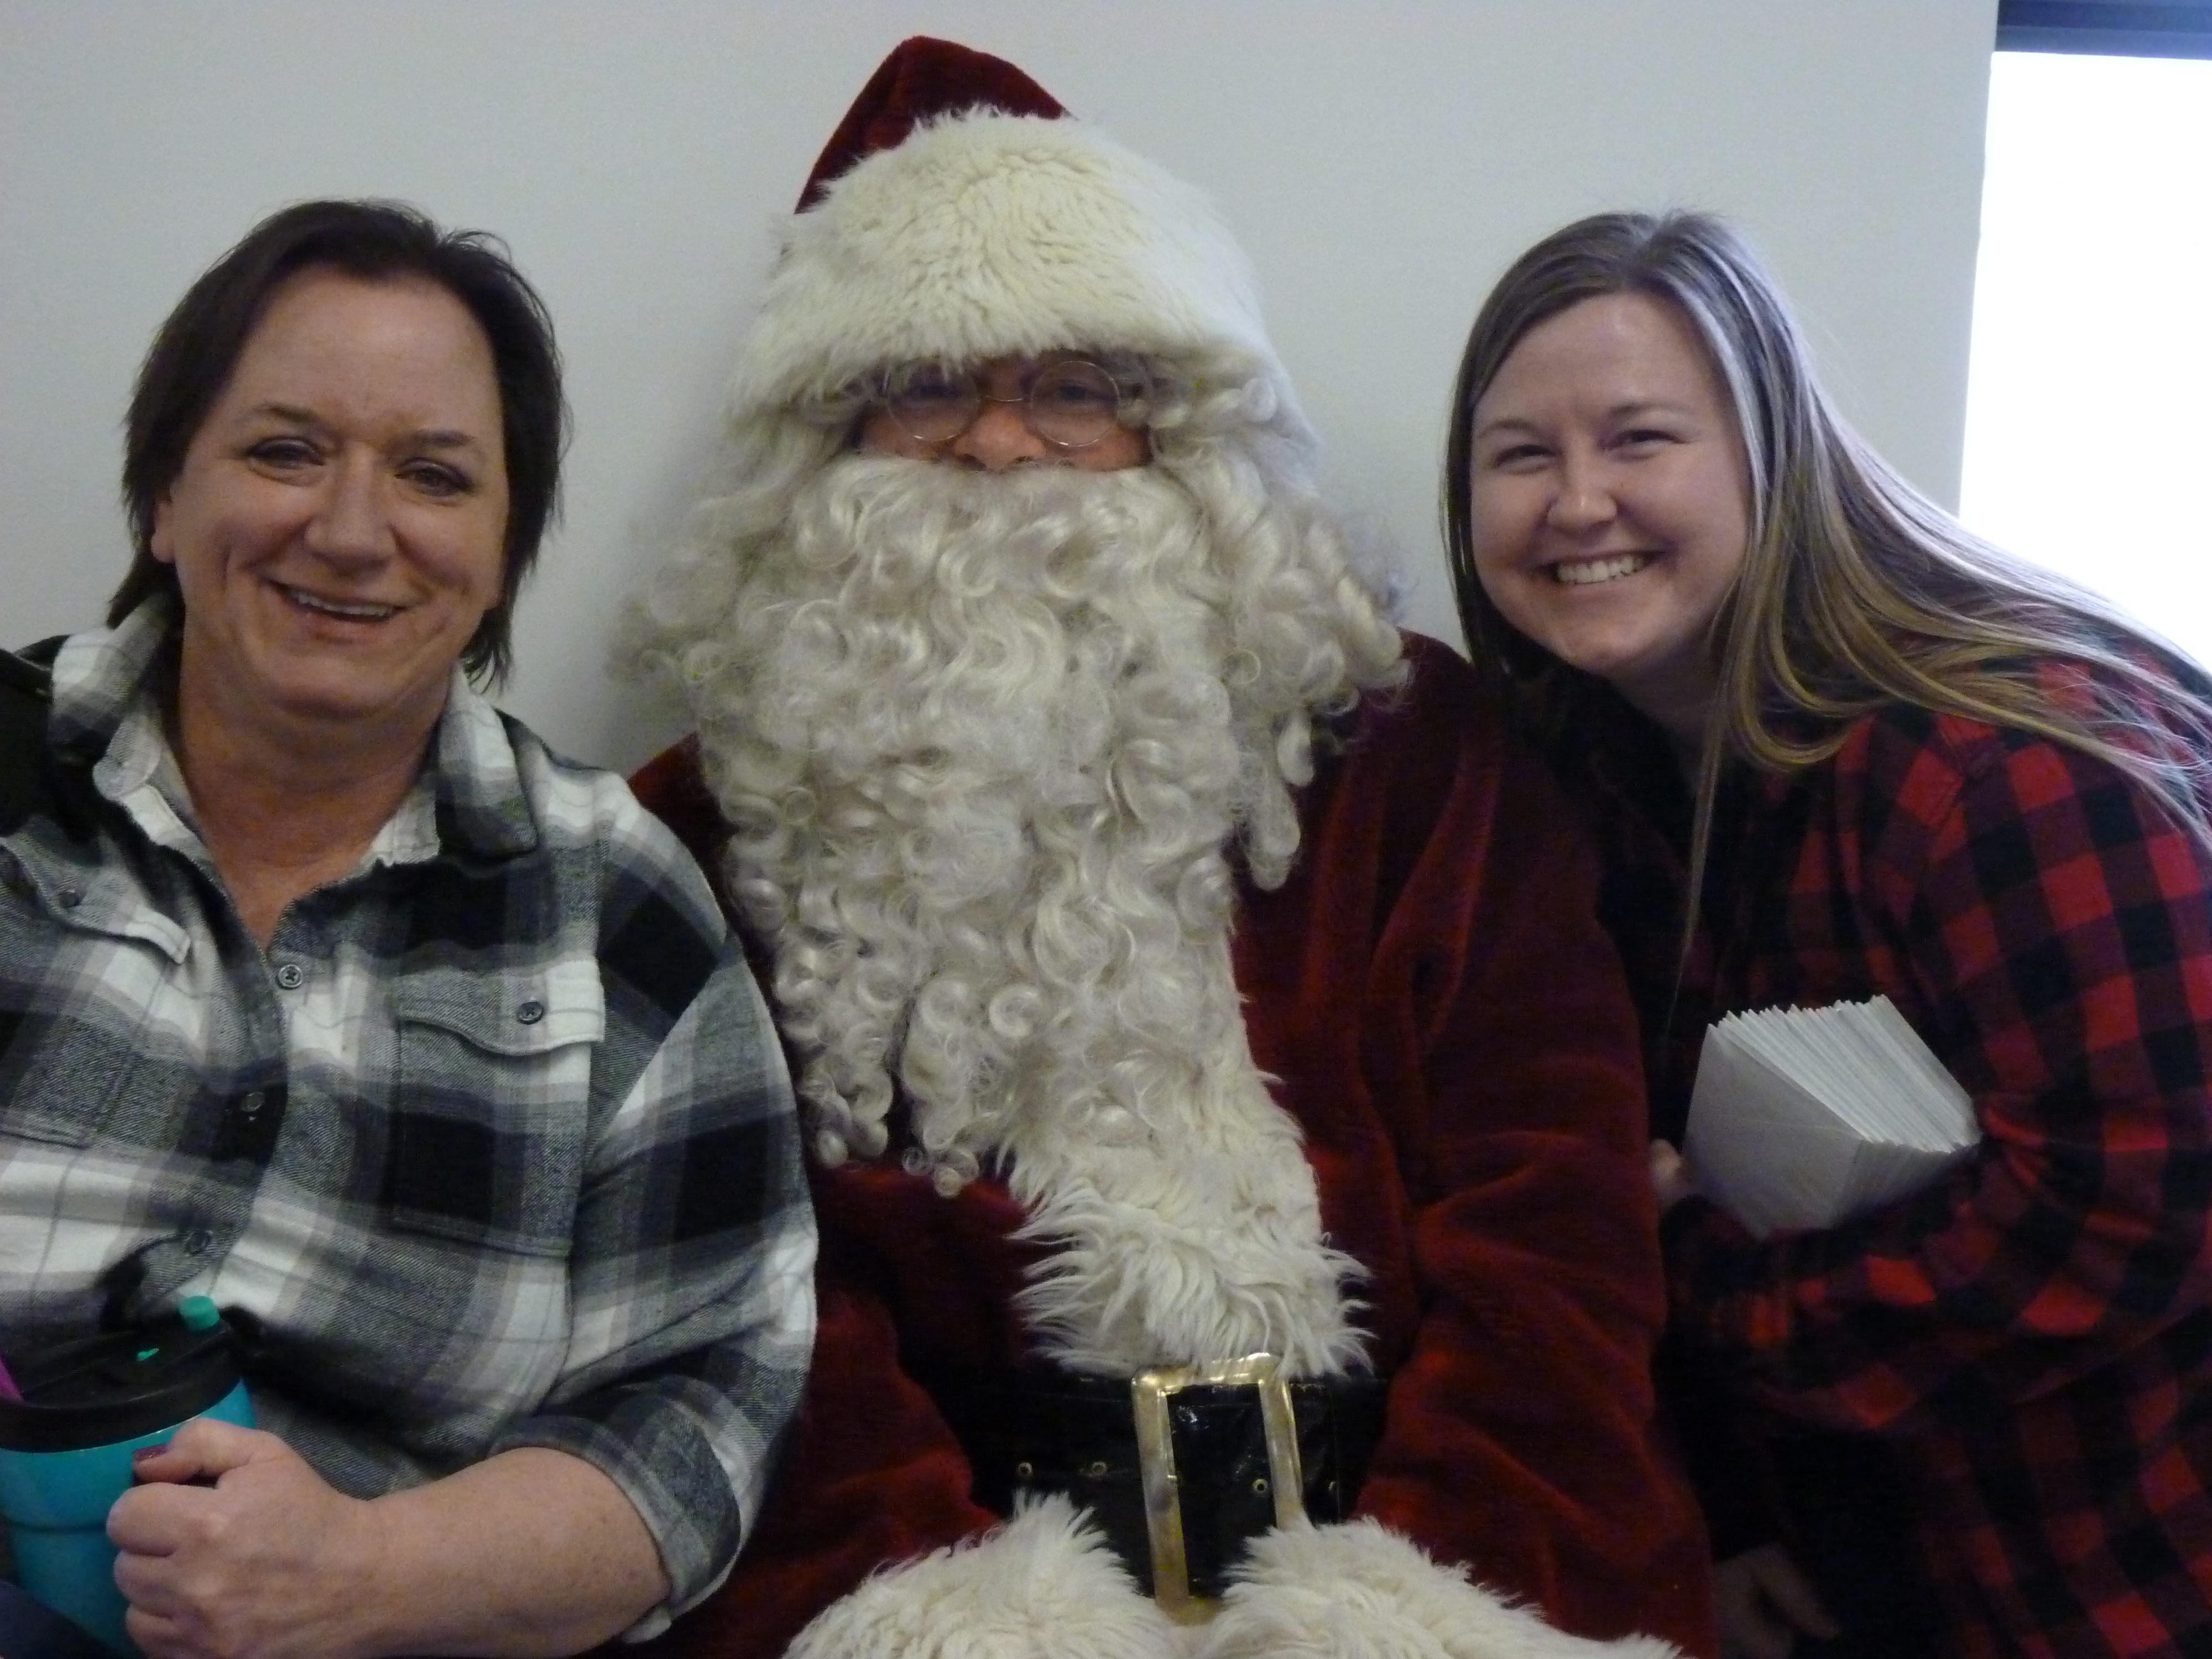 Jennifer, a supervisor and Sandy, bookkeeper smiling with Santa